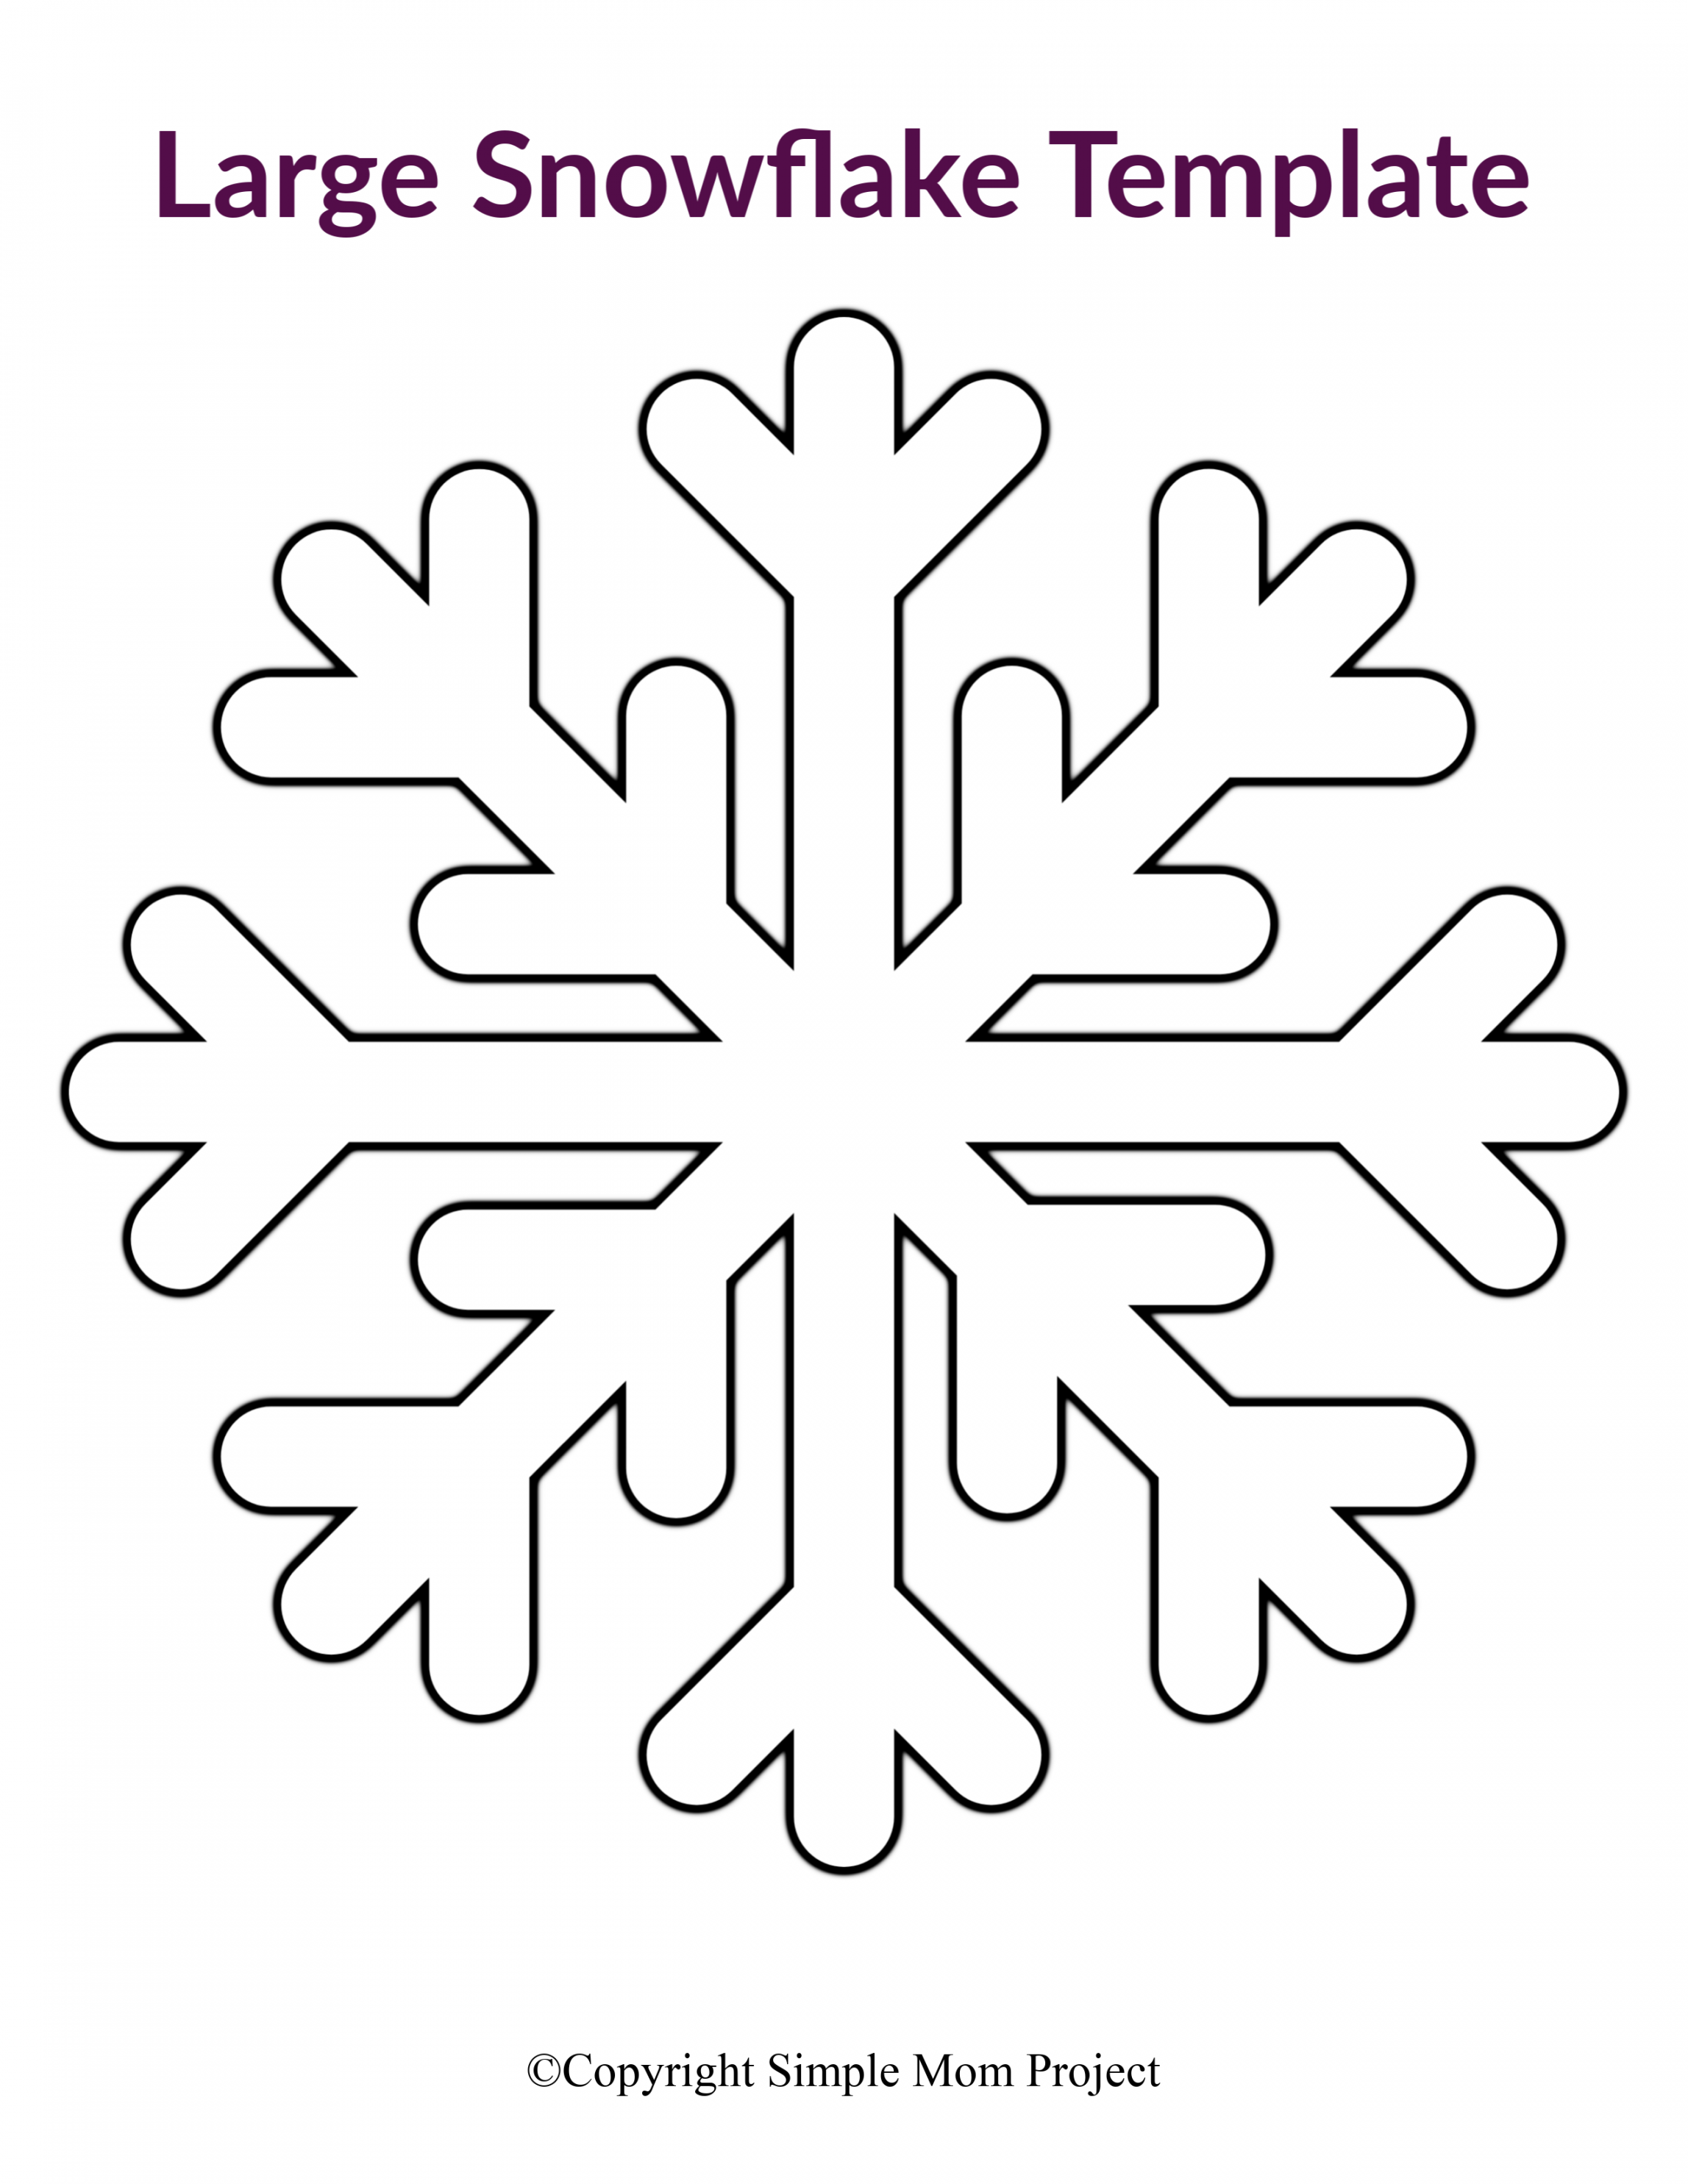 Free Printable Large Snowflake Templates - Simple Mom Project - FREE Printables - Printable Snowflake Outline